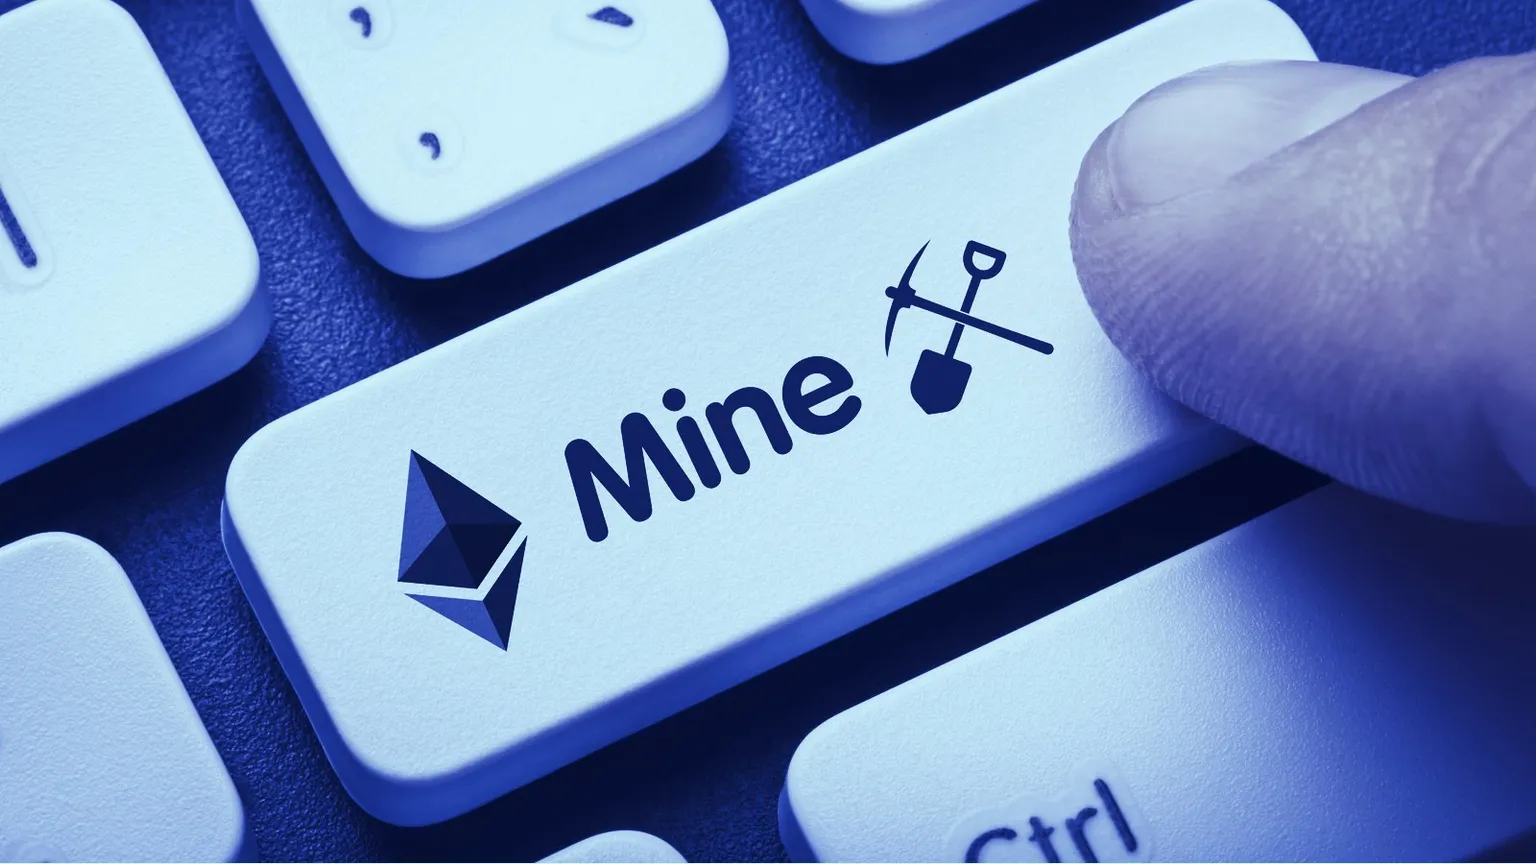 Ethereum mining button on keyboard. Image: Shutterstock